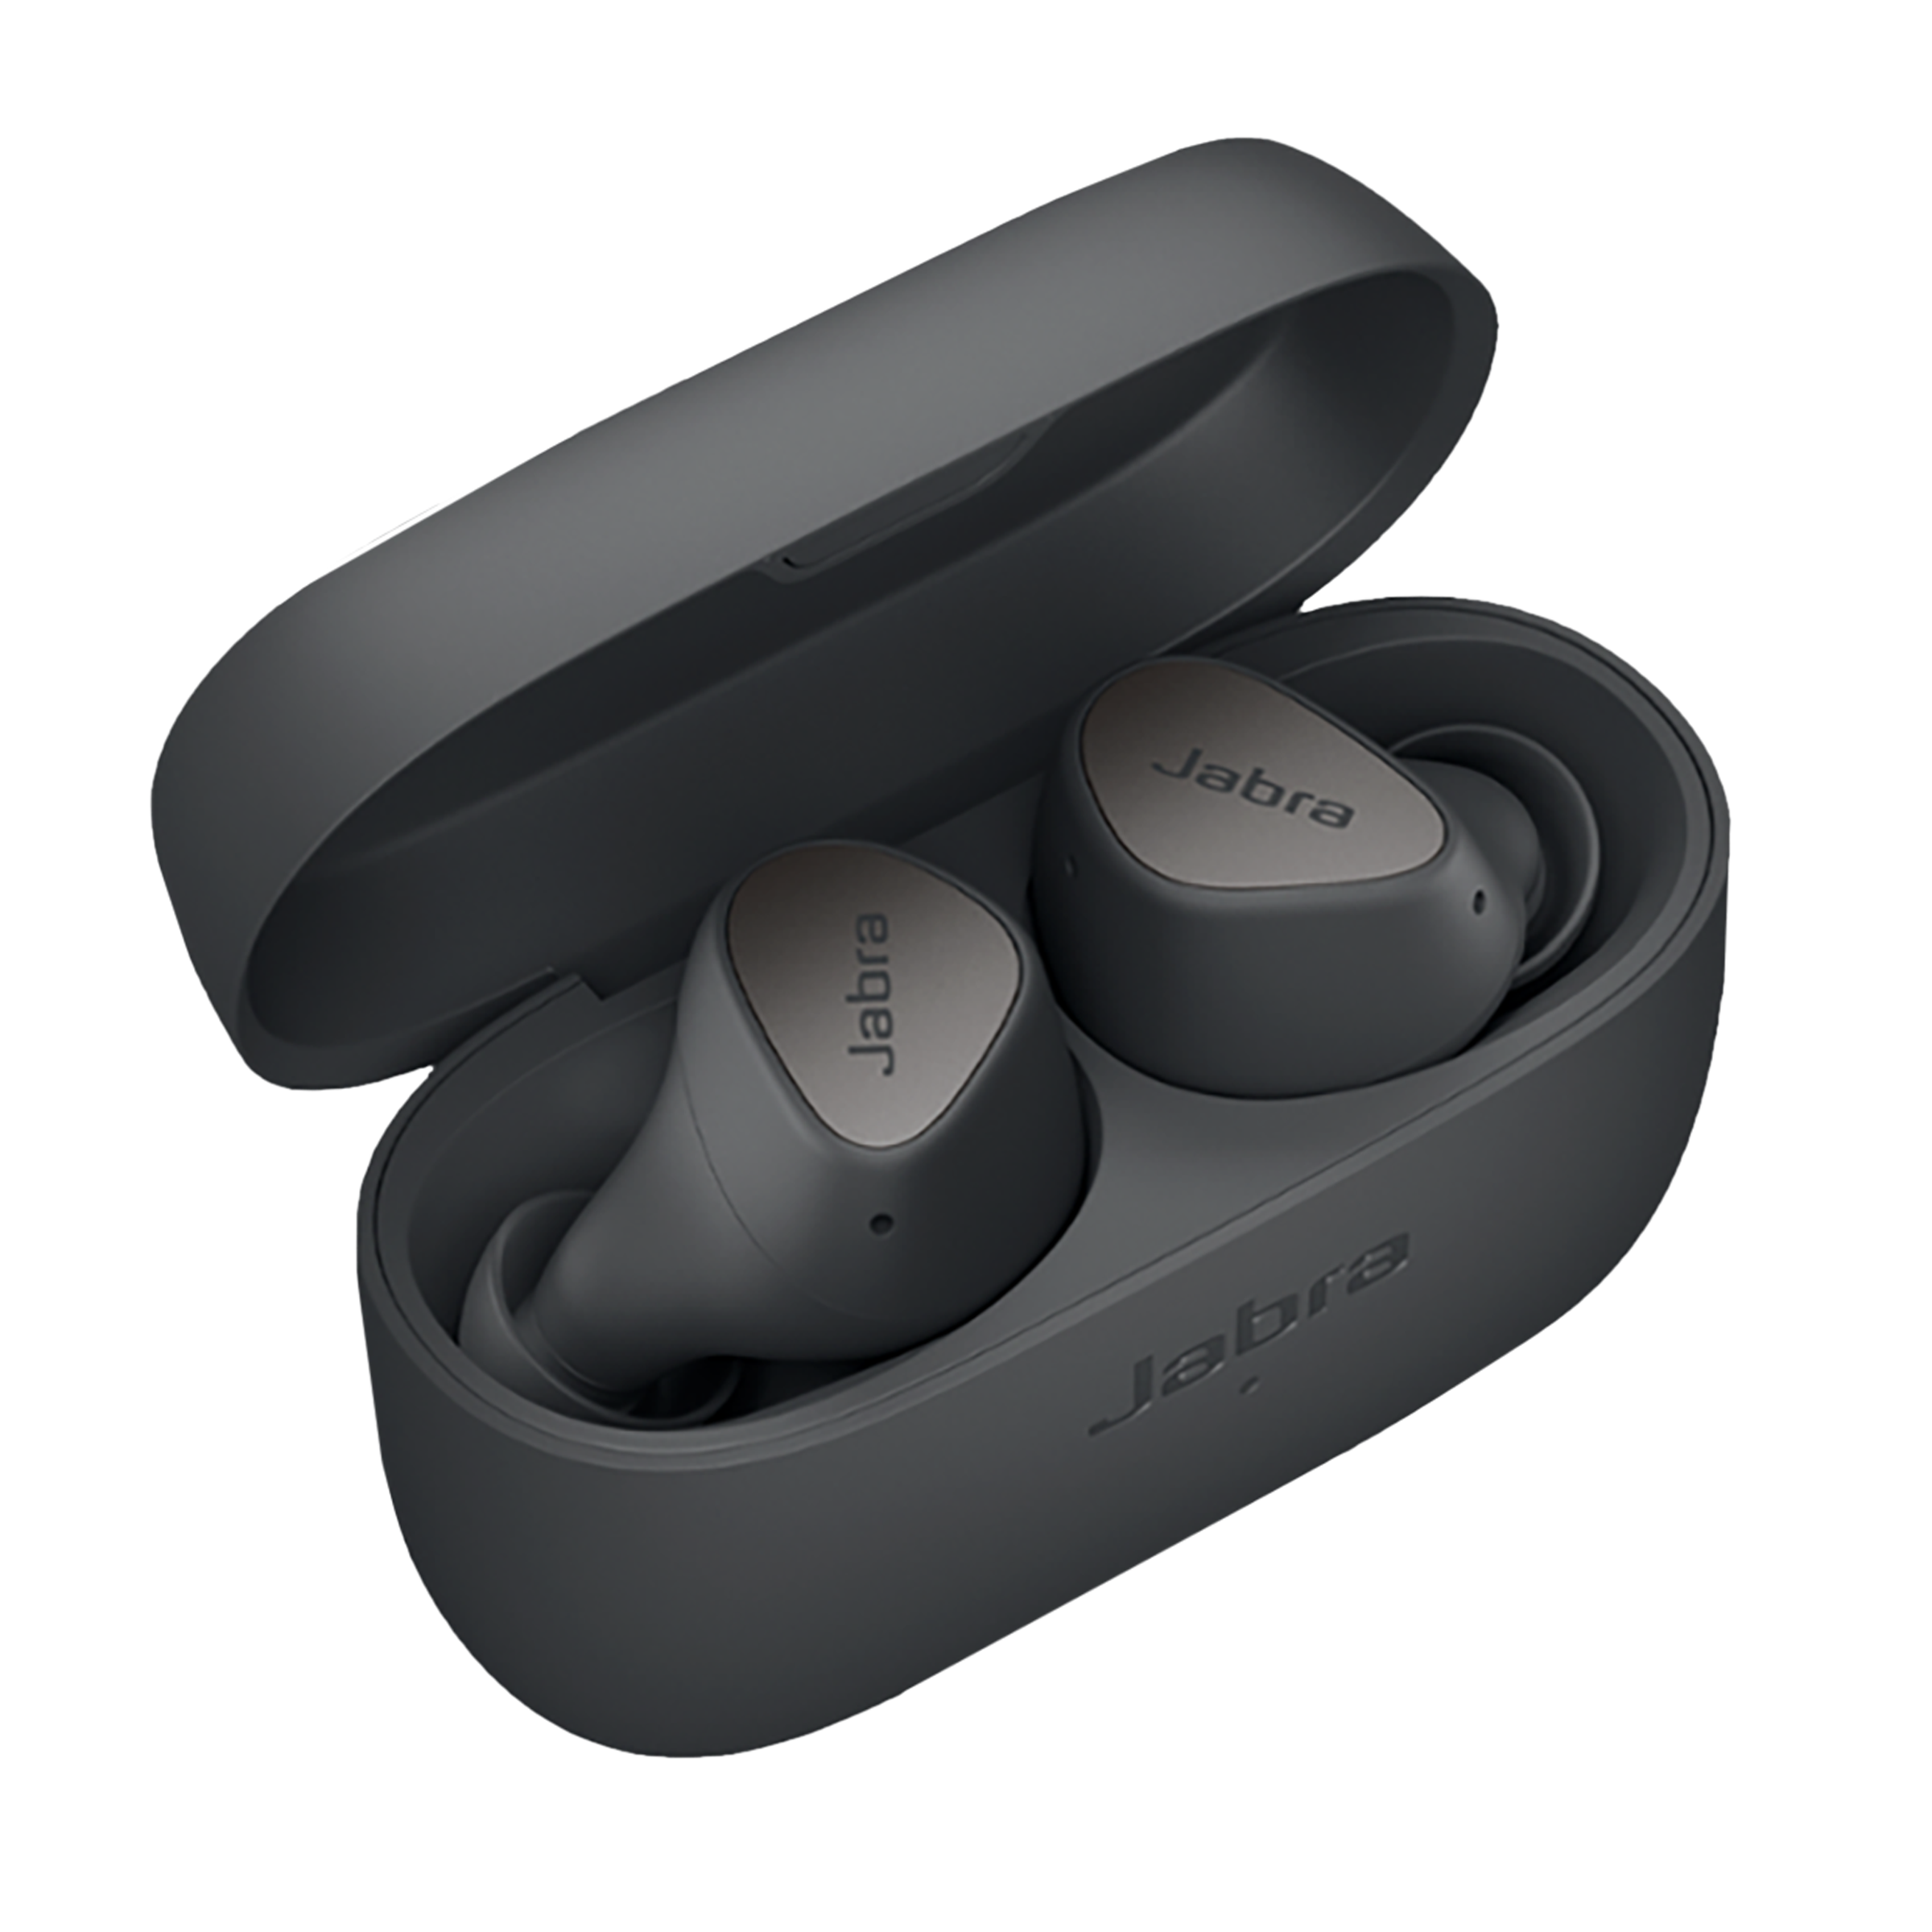 Jabra Elite 3 review: lightweight, affordable true wireless earbuds